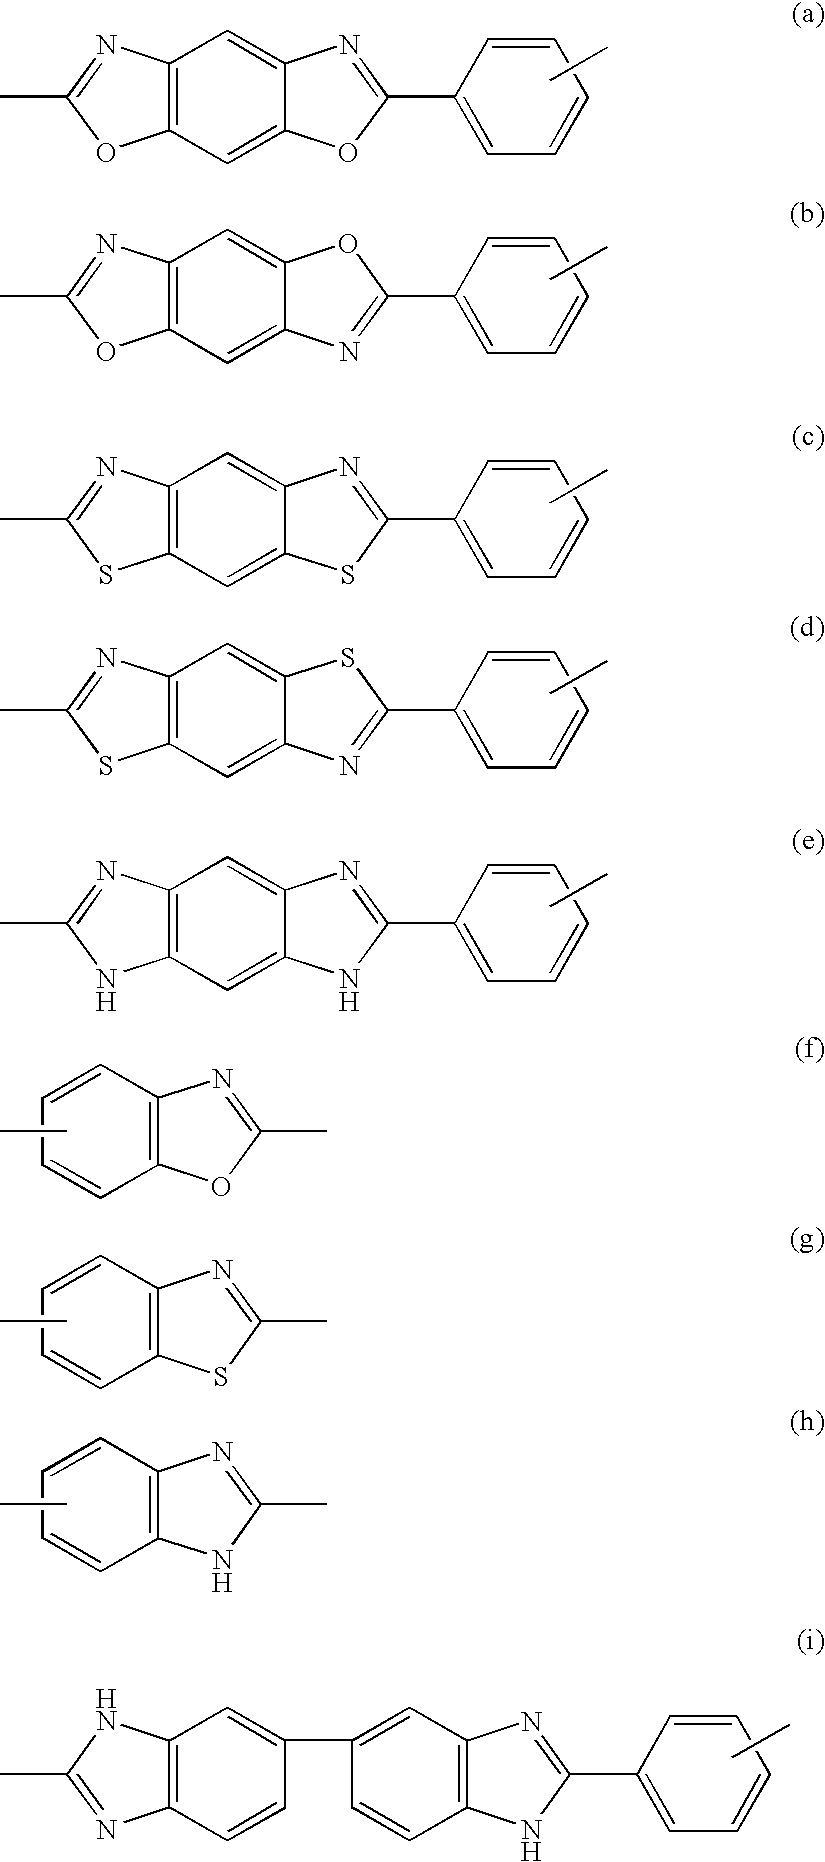 Polybenzazole fiber and use thereof